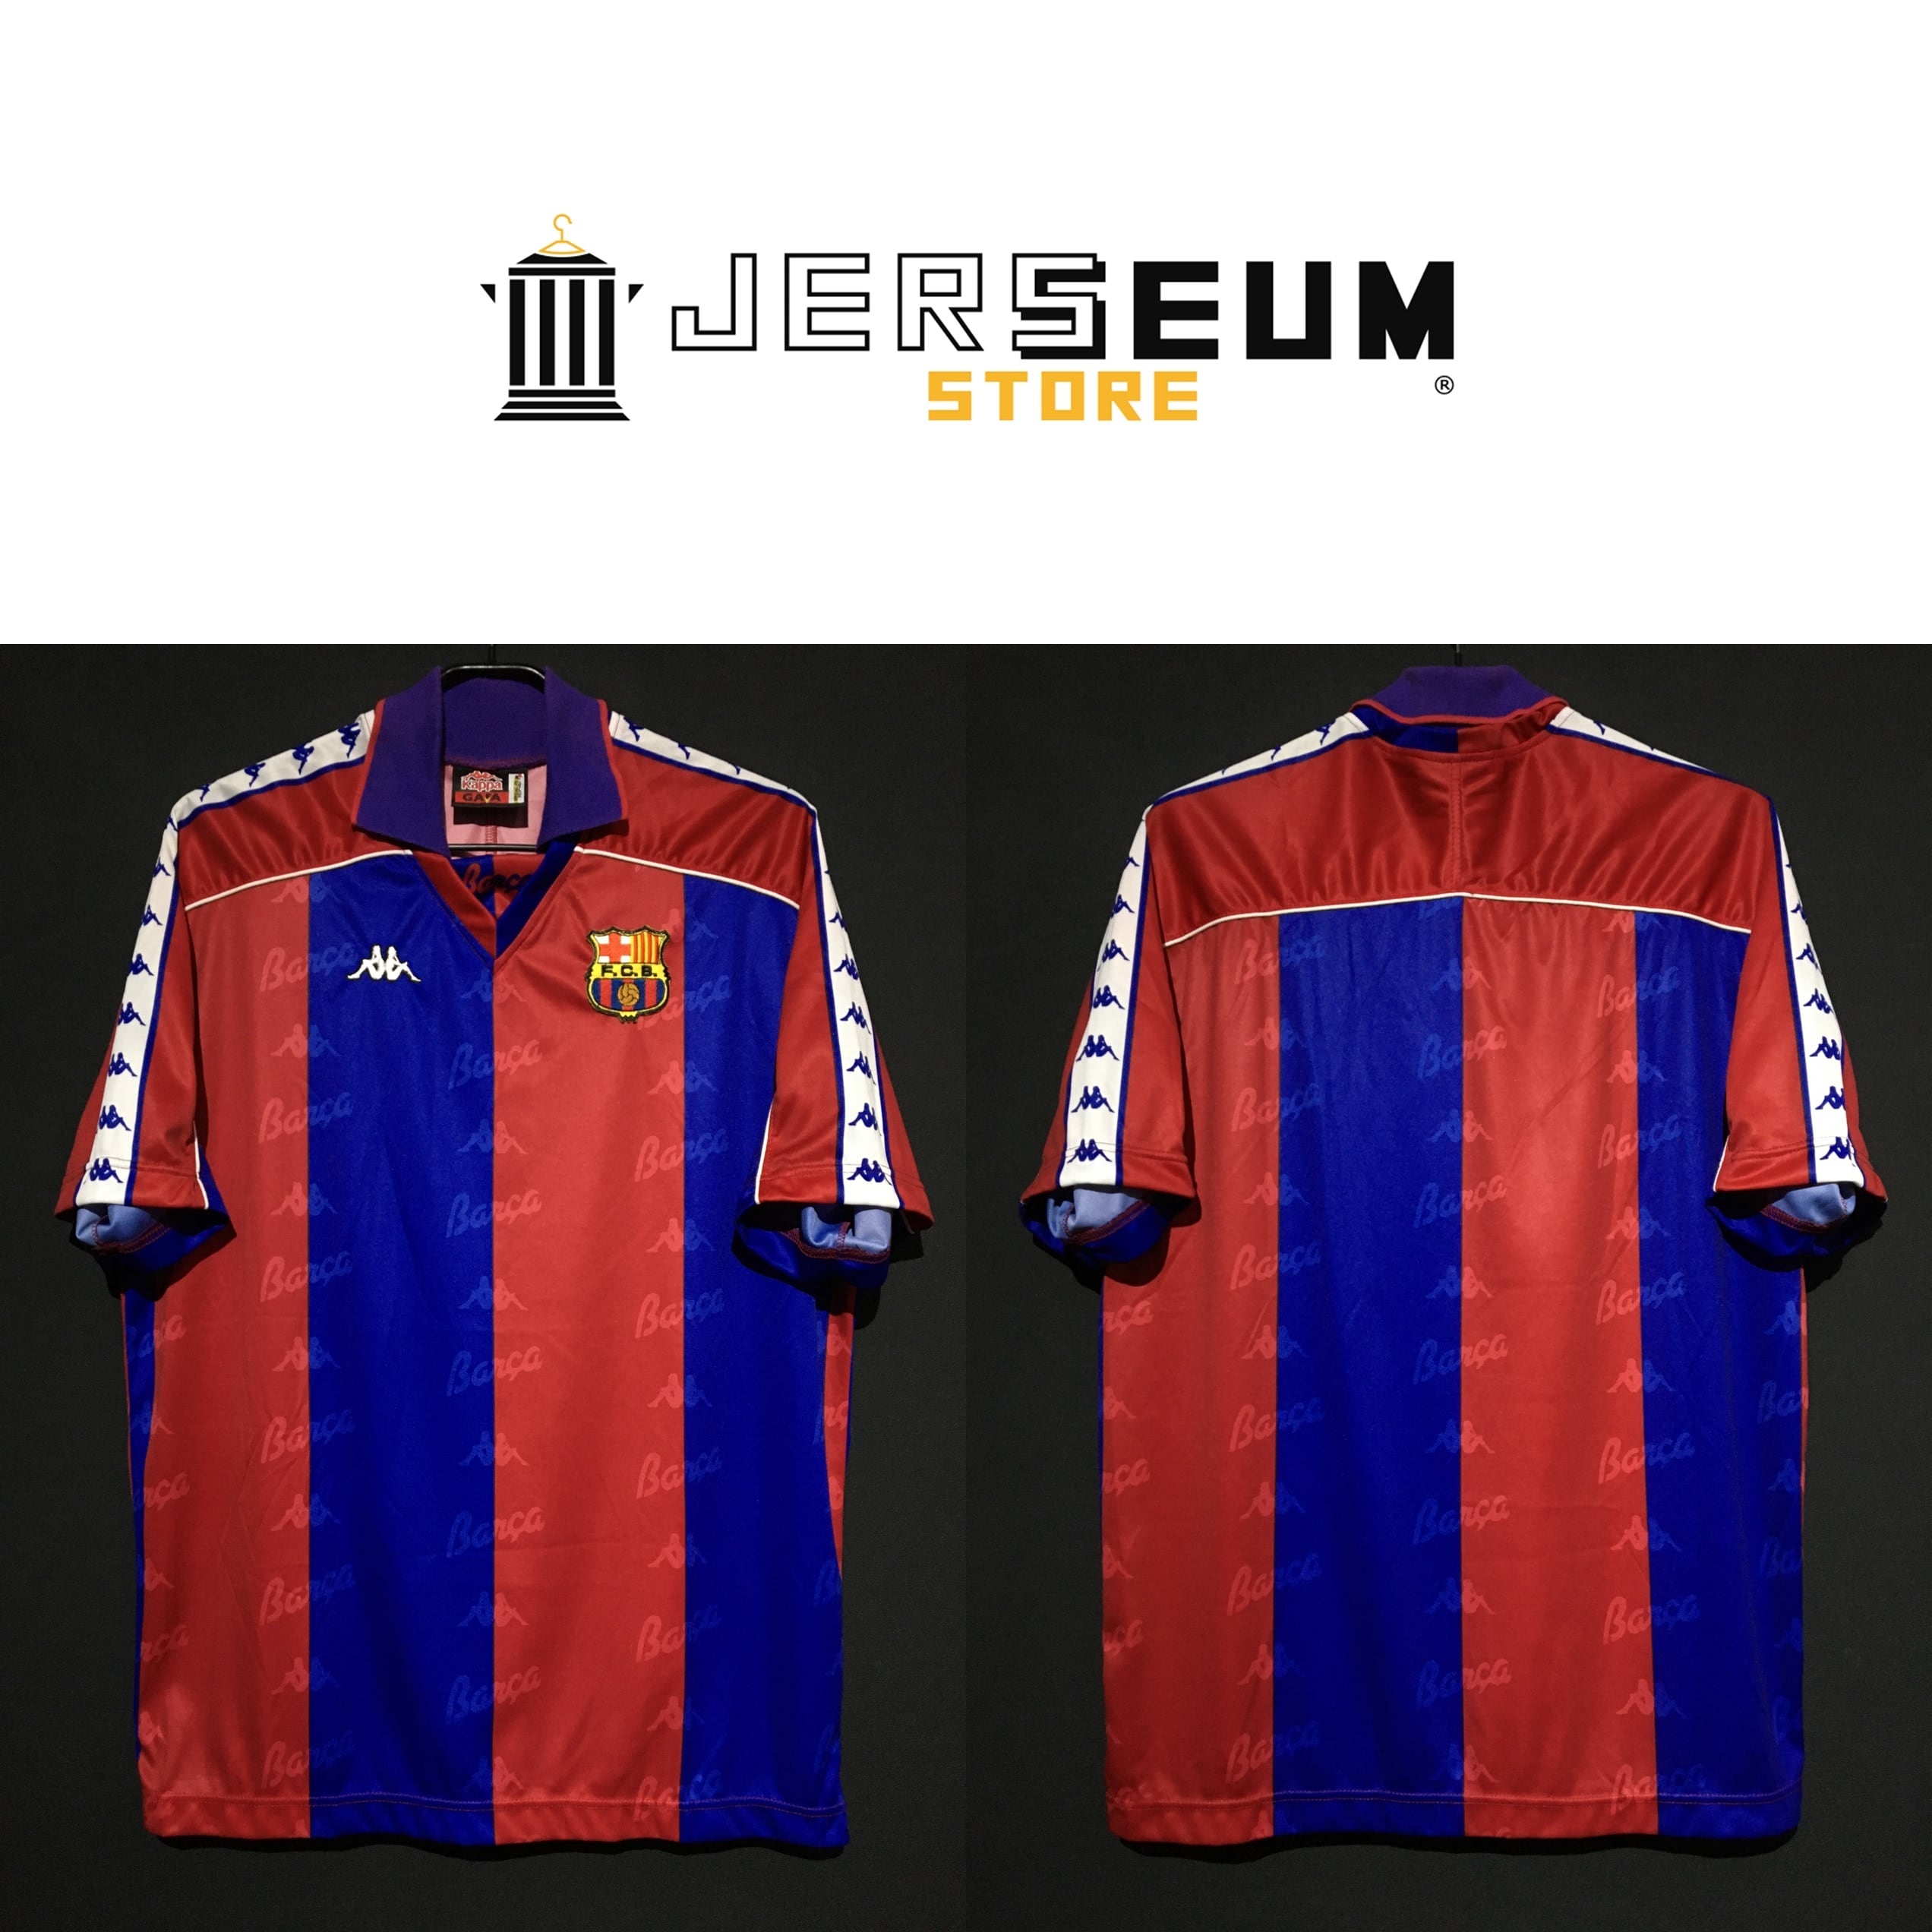 FC Barcelona：FCバルセロナ   Jerseum Store